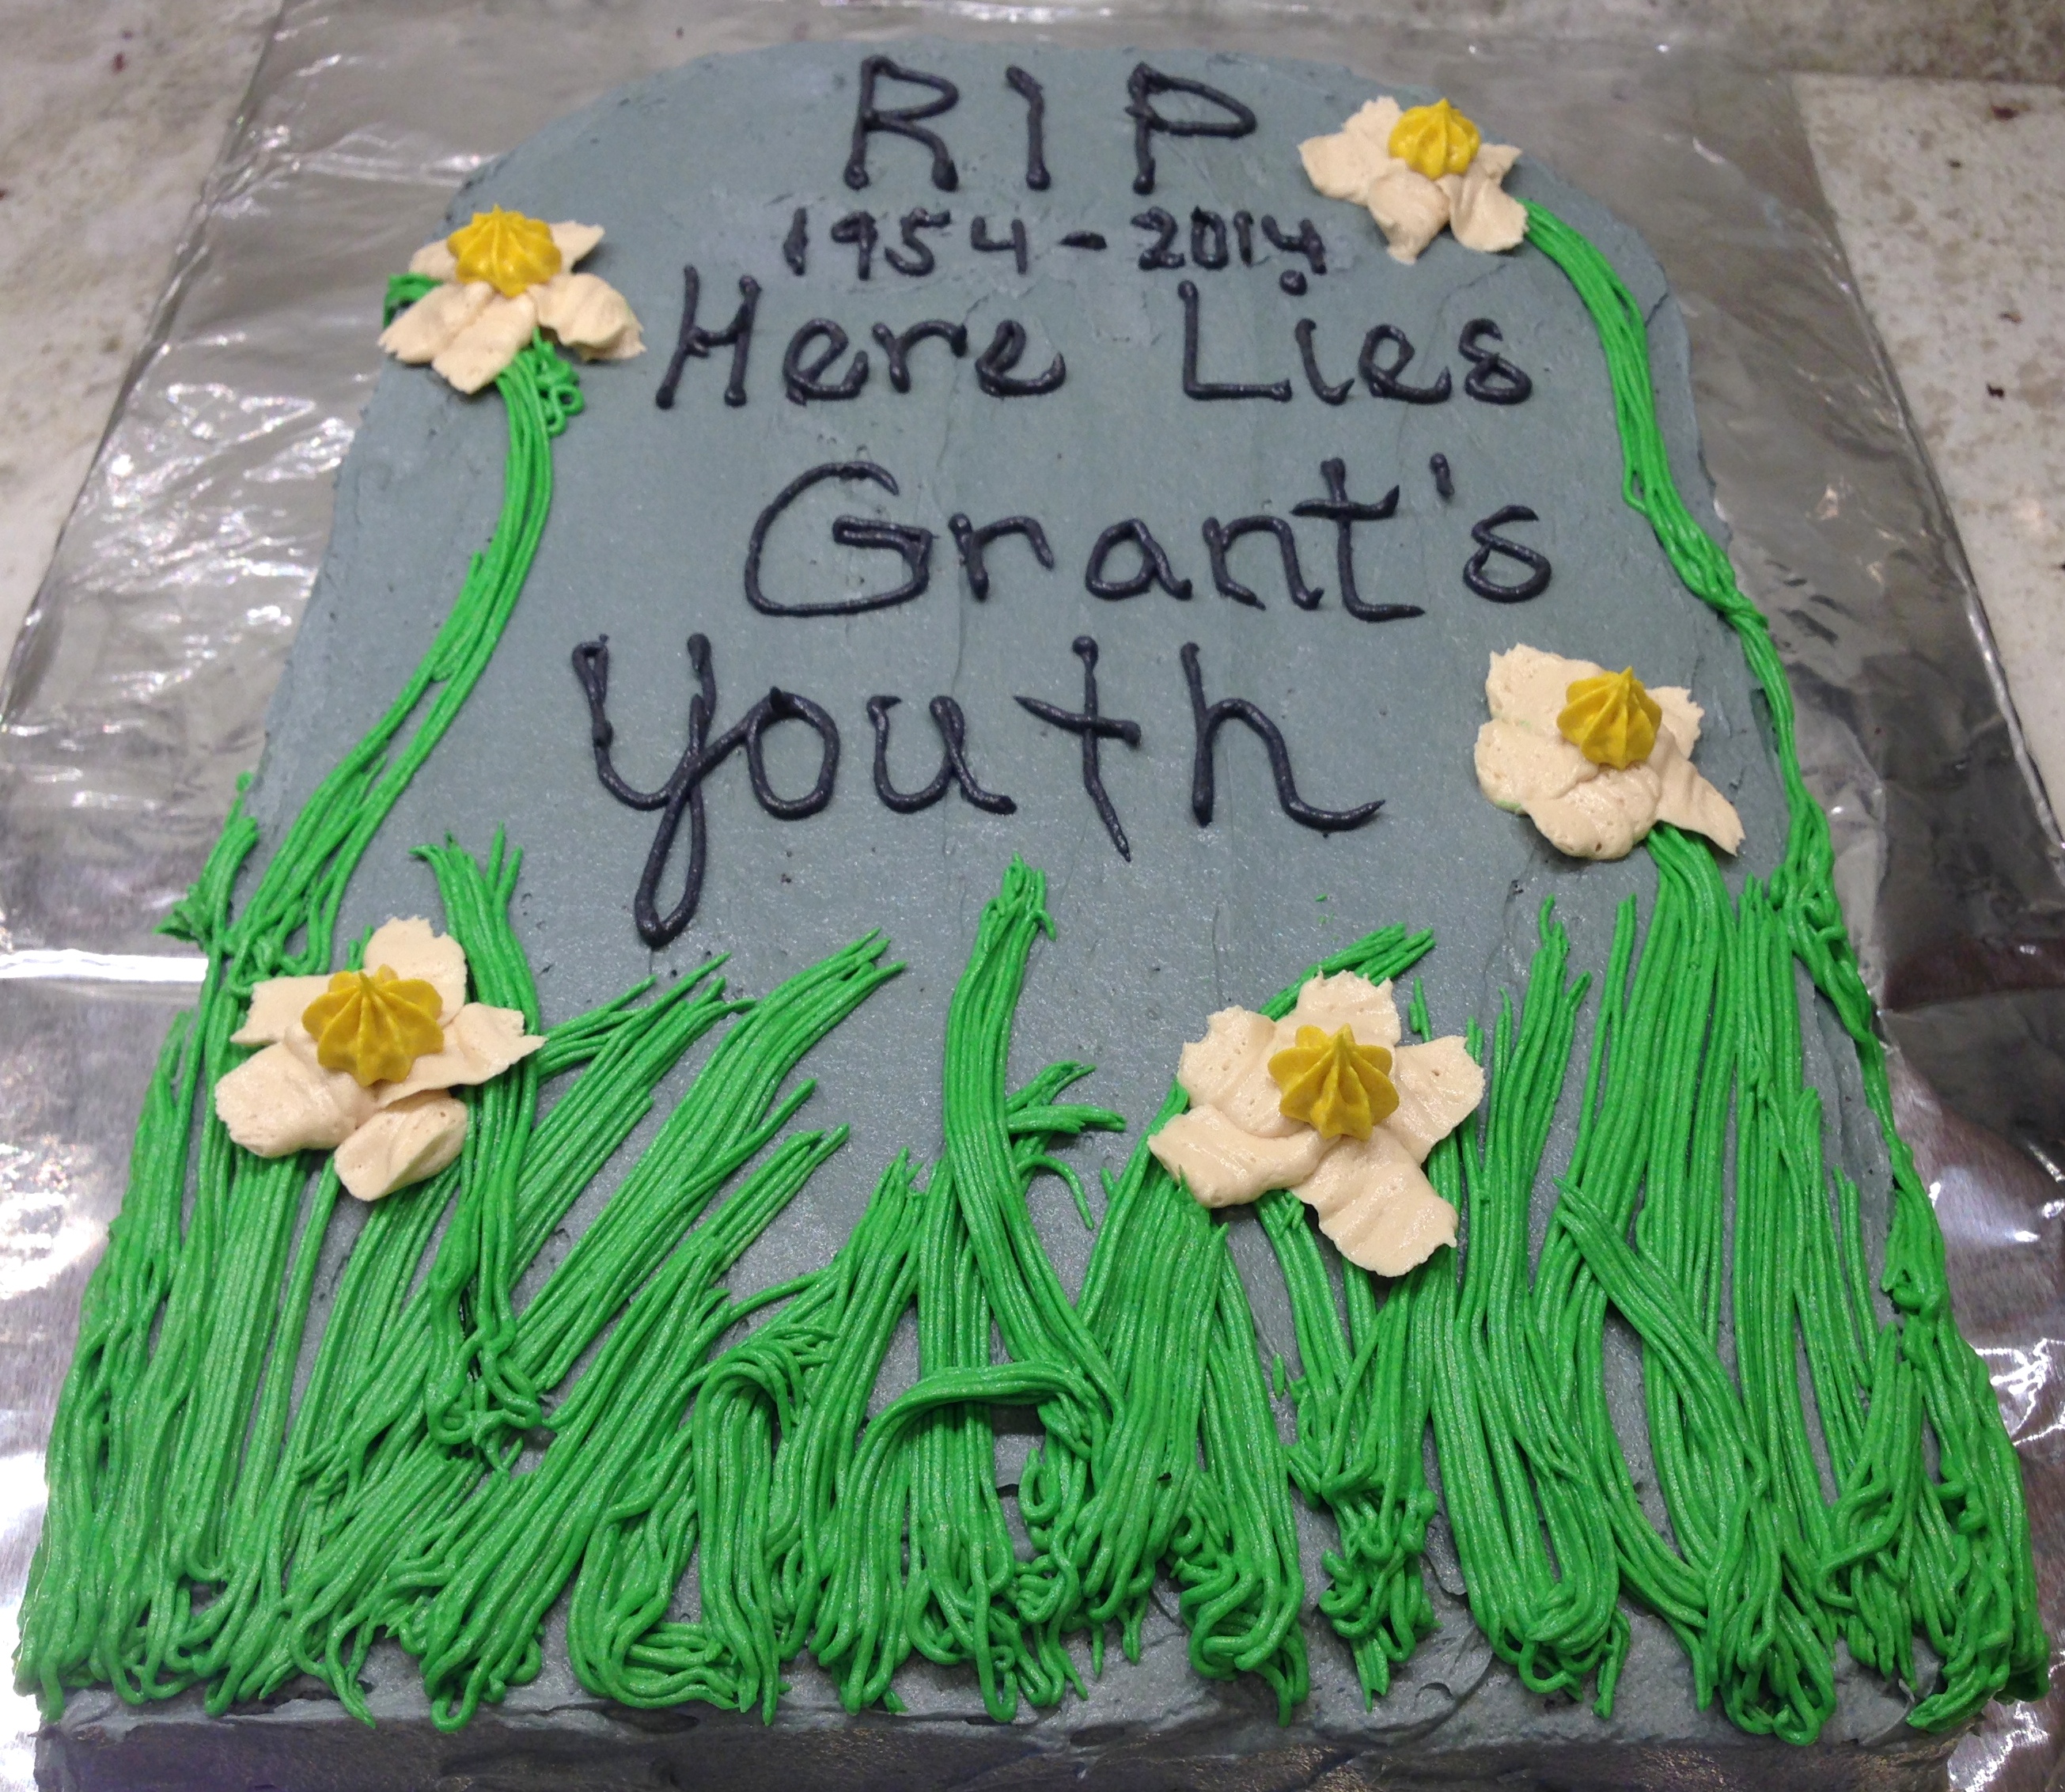 Grant's Gravestone Cake